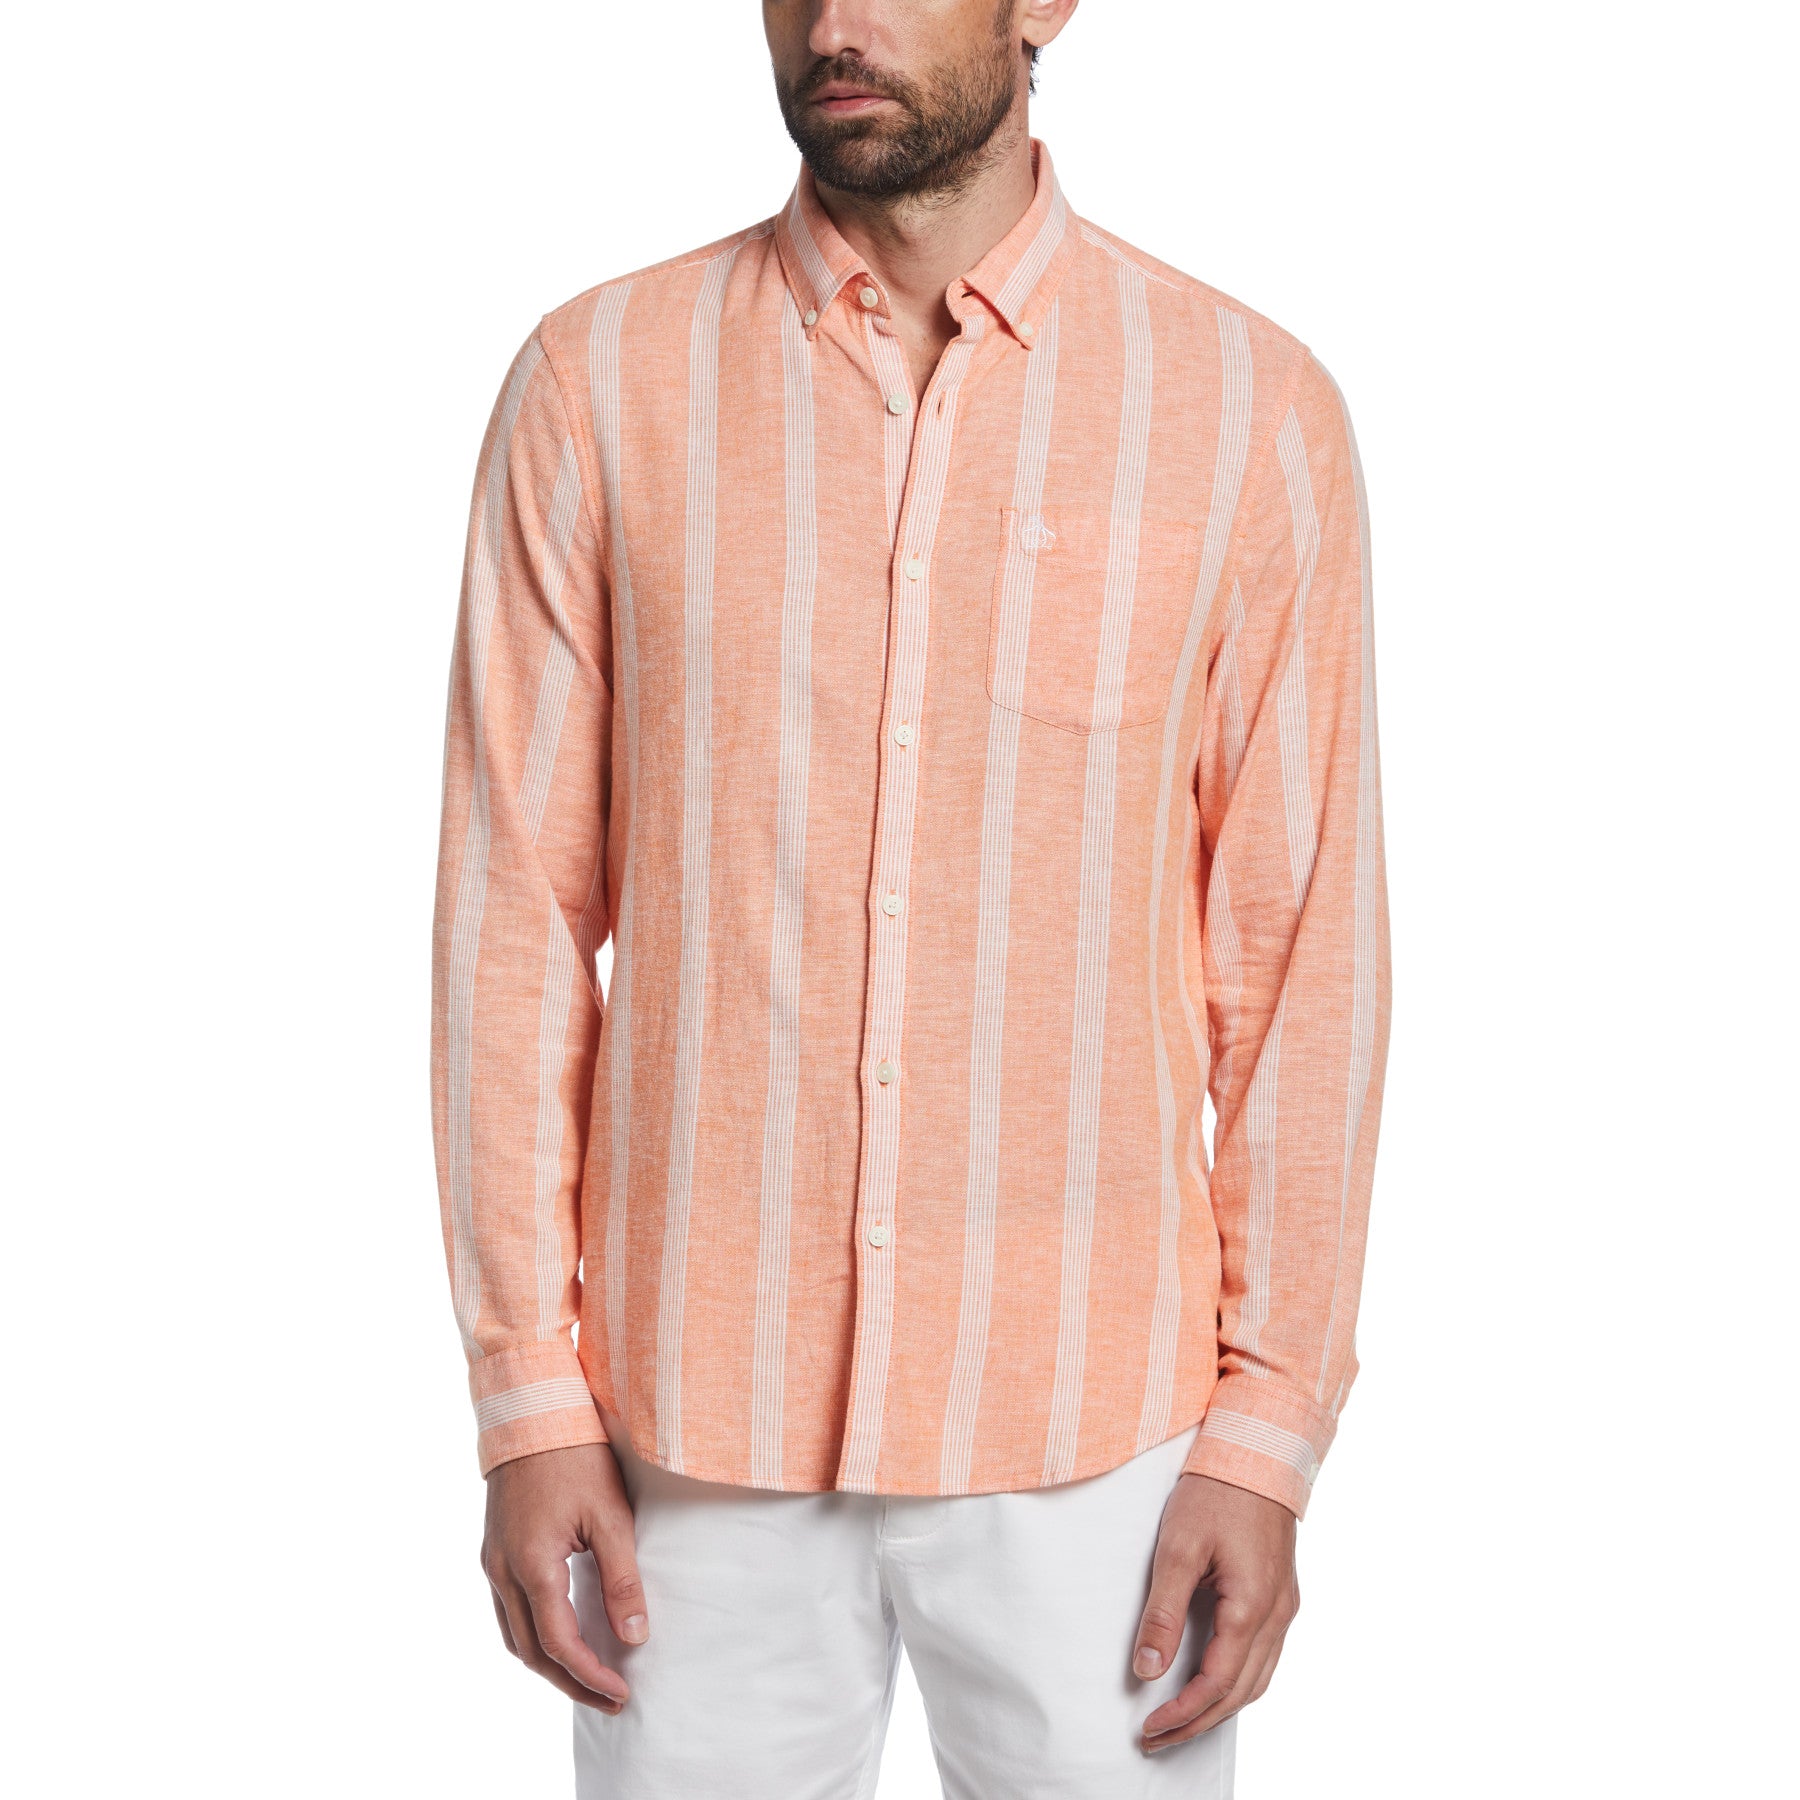 View Linen Ecovero Blend Stripe Shirt In Russet Orange information